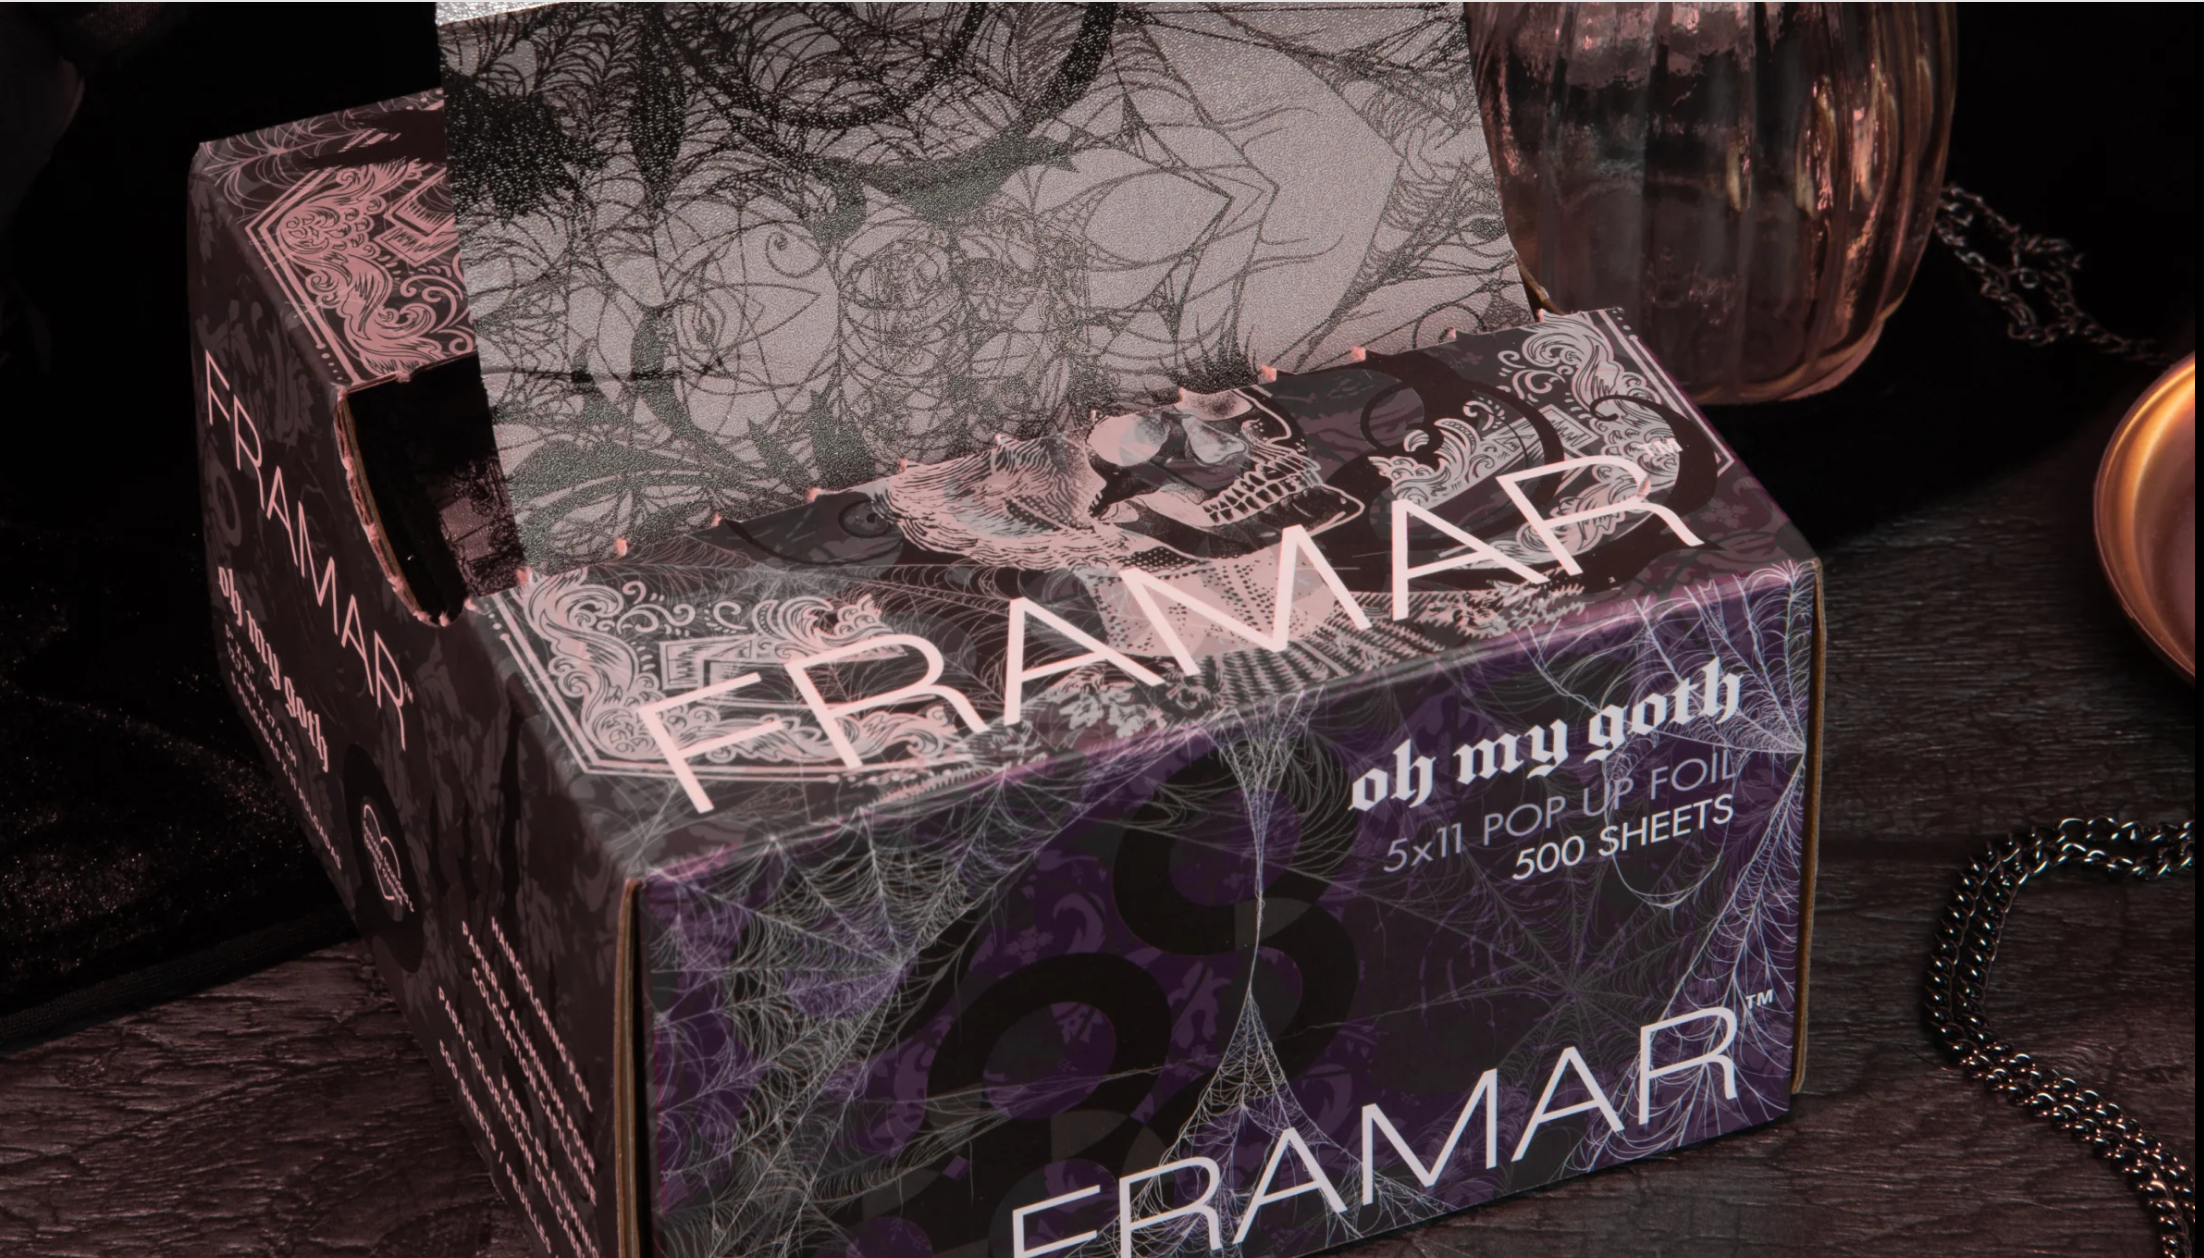 Framar 5x11 Pop Up Foils - Yeehaw